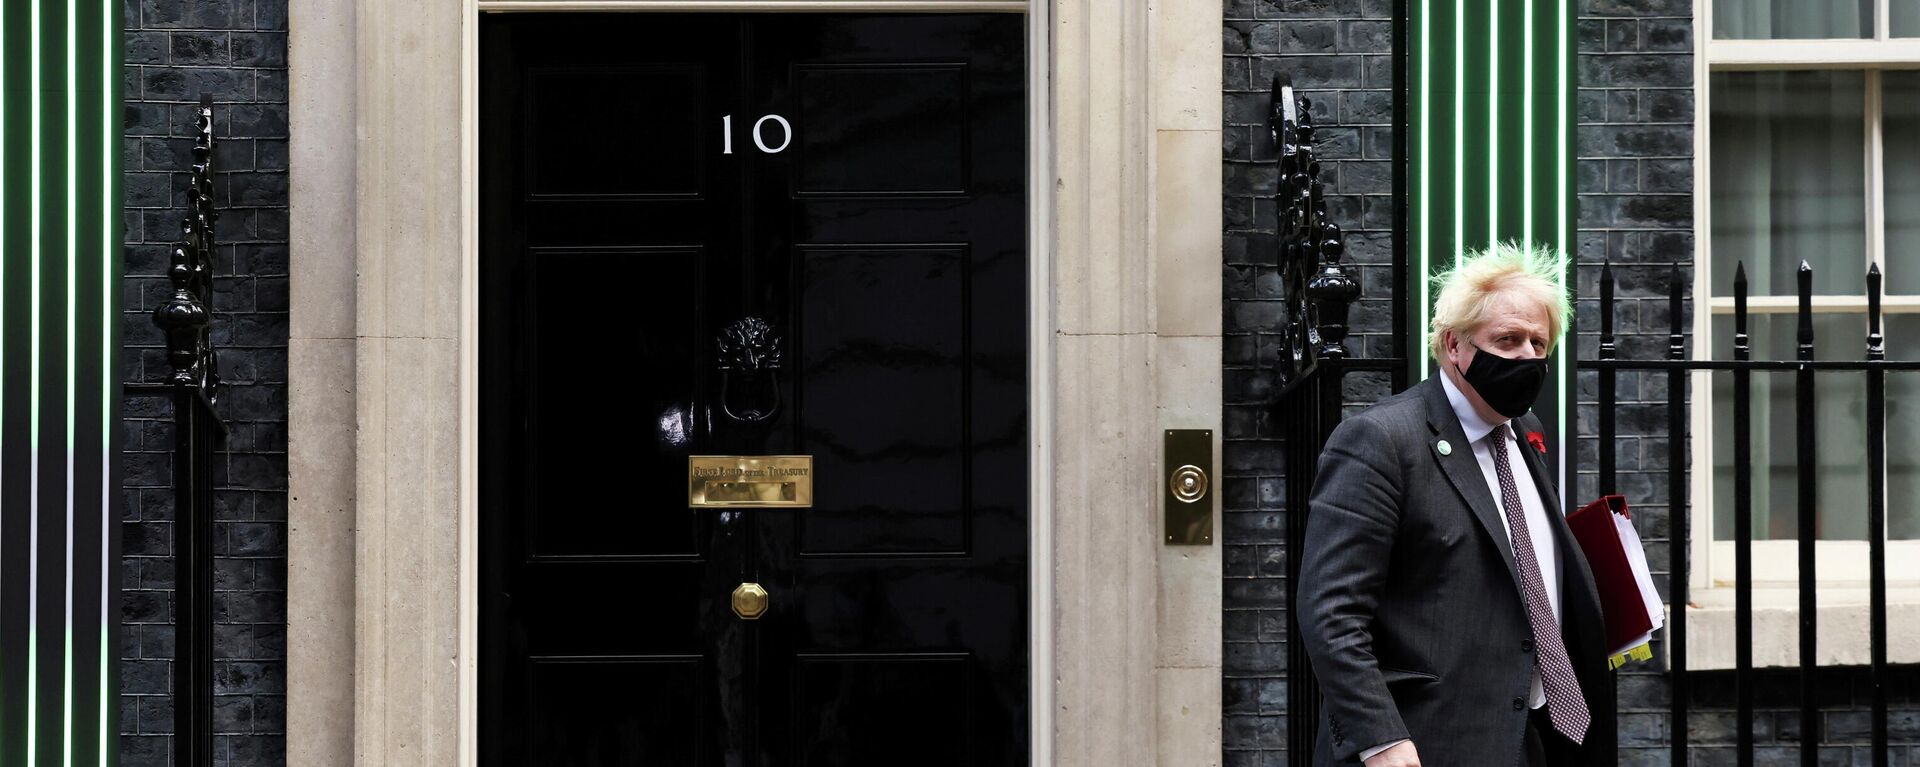 British Prime Minister Boris Johnson leaves 10 Downing Street in London, Britain, November 3, 2021. REUTERS/Henry Nicholls - Sputnik International, 1920, 24.11.2021